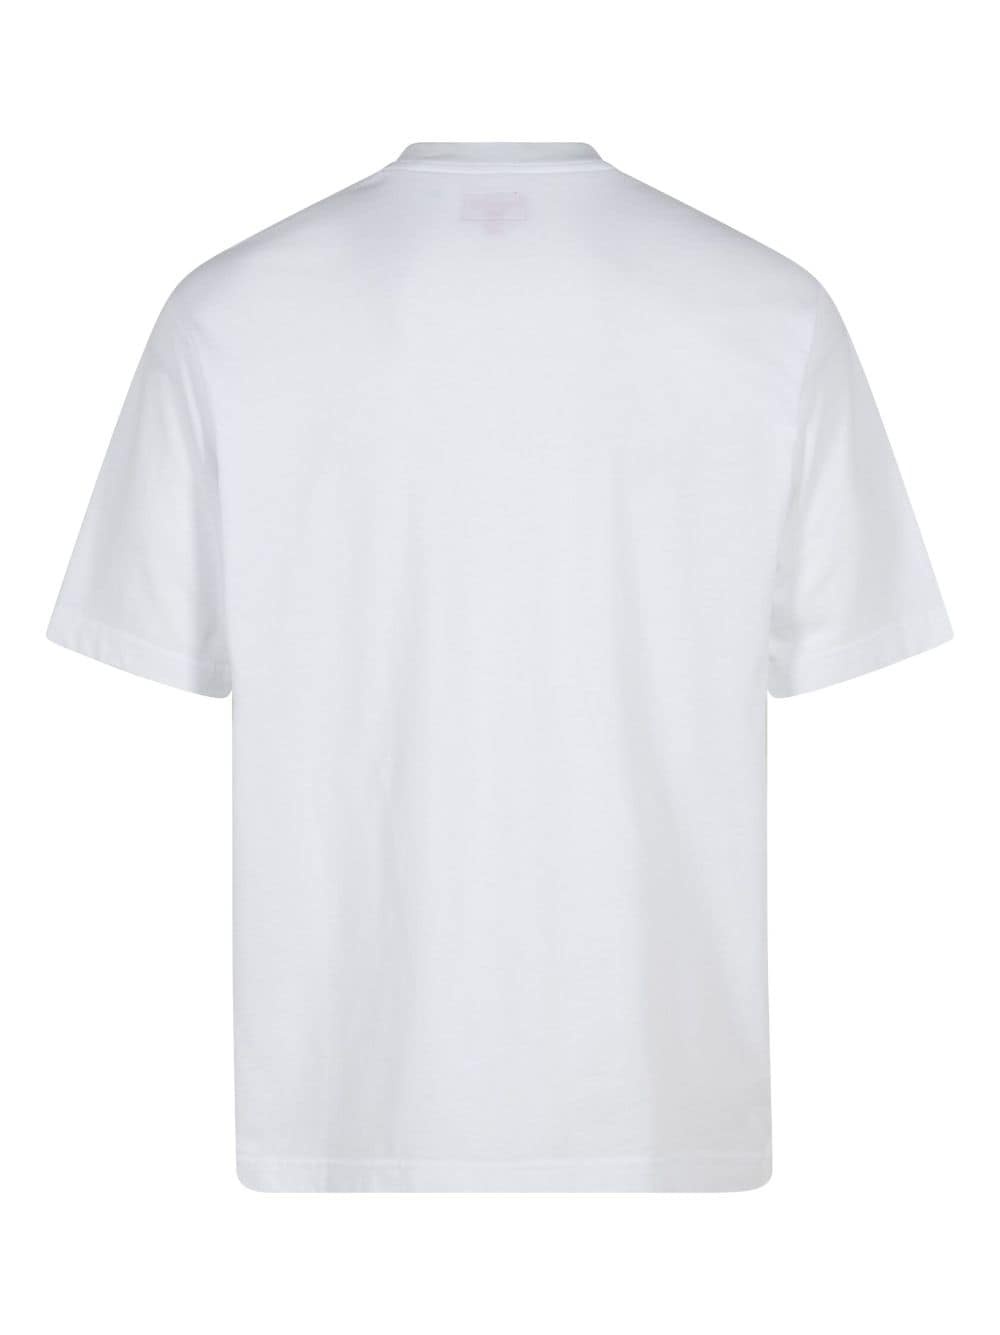 Small Box "White" T-shirt - 2